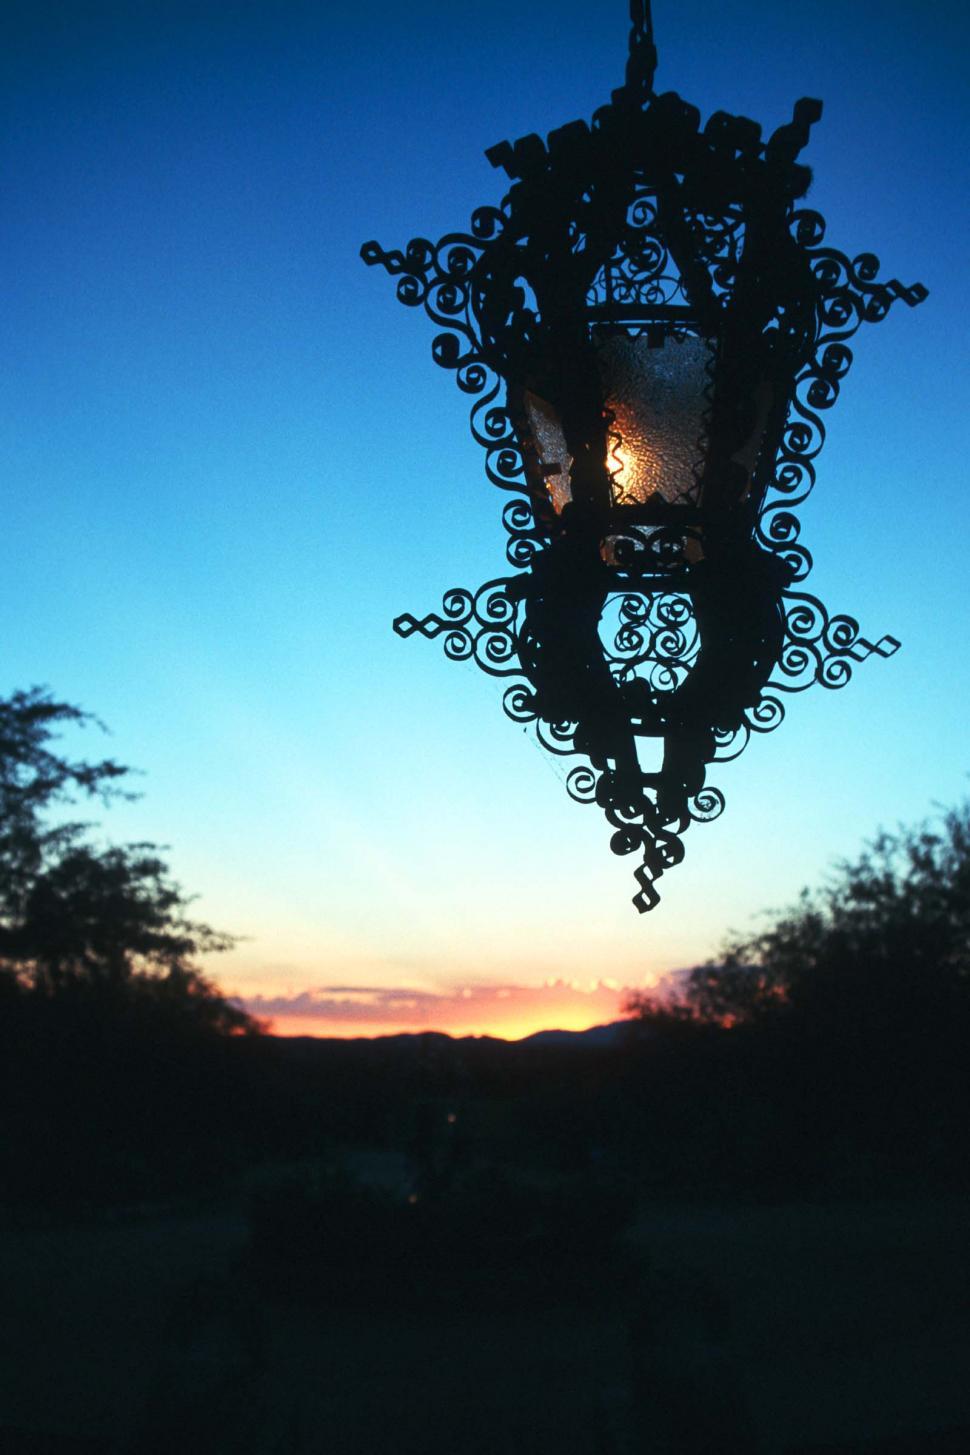 Free Image of lamp hanging ornate metalwork sunset glowing desert sonoran sky 